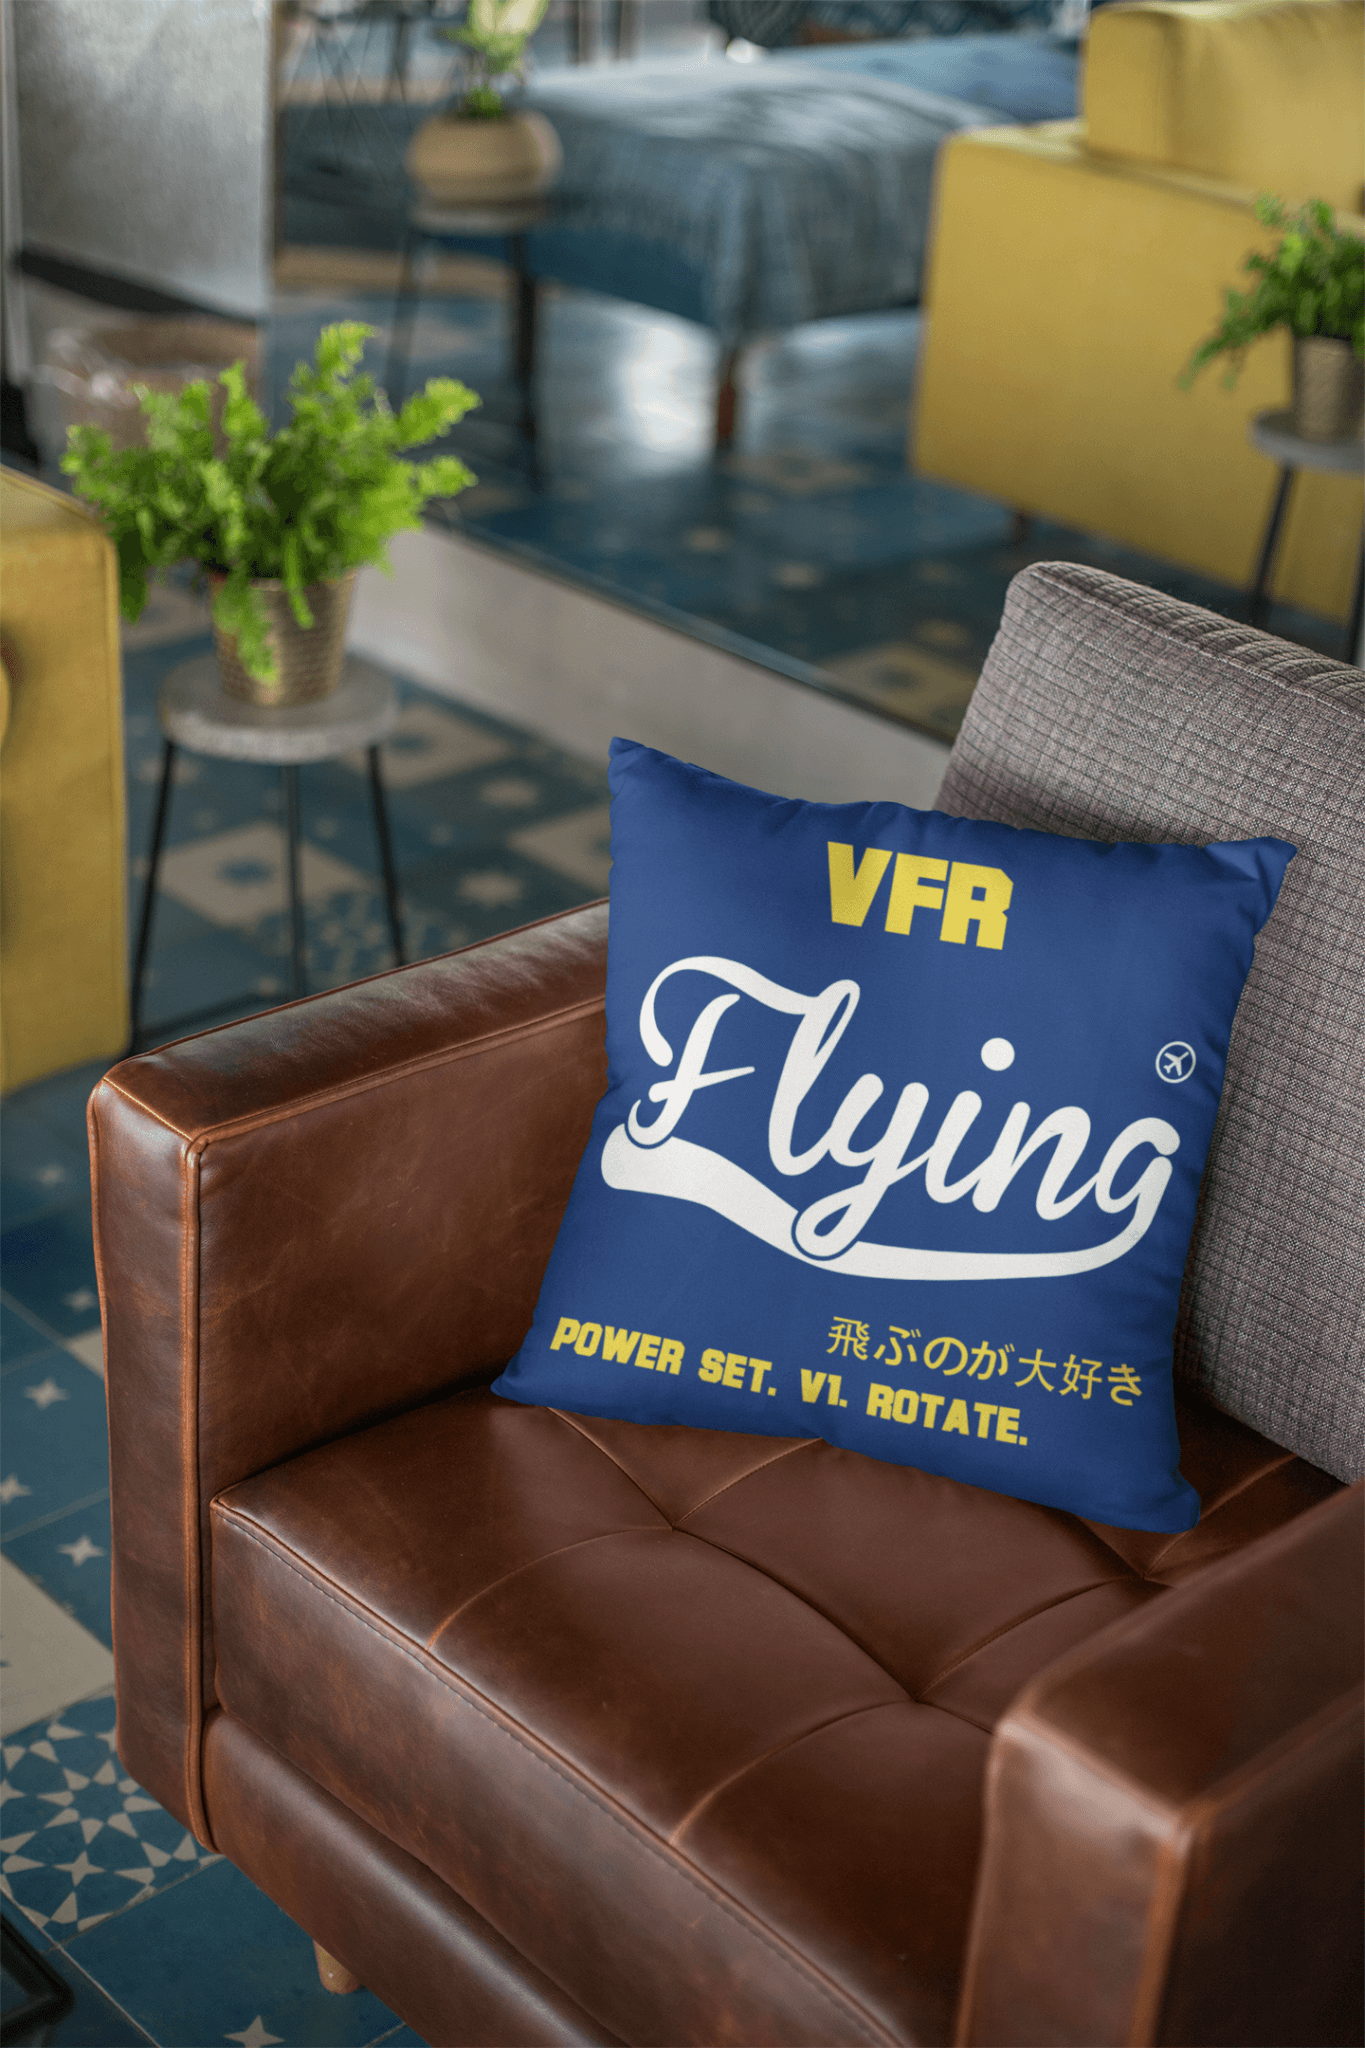 VFR Flying - 25center.com